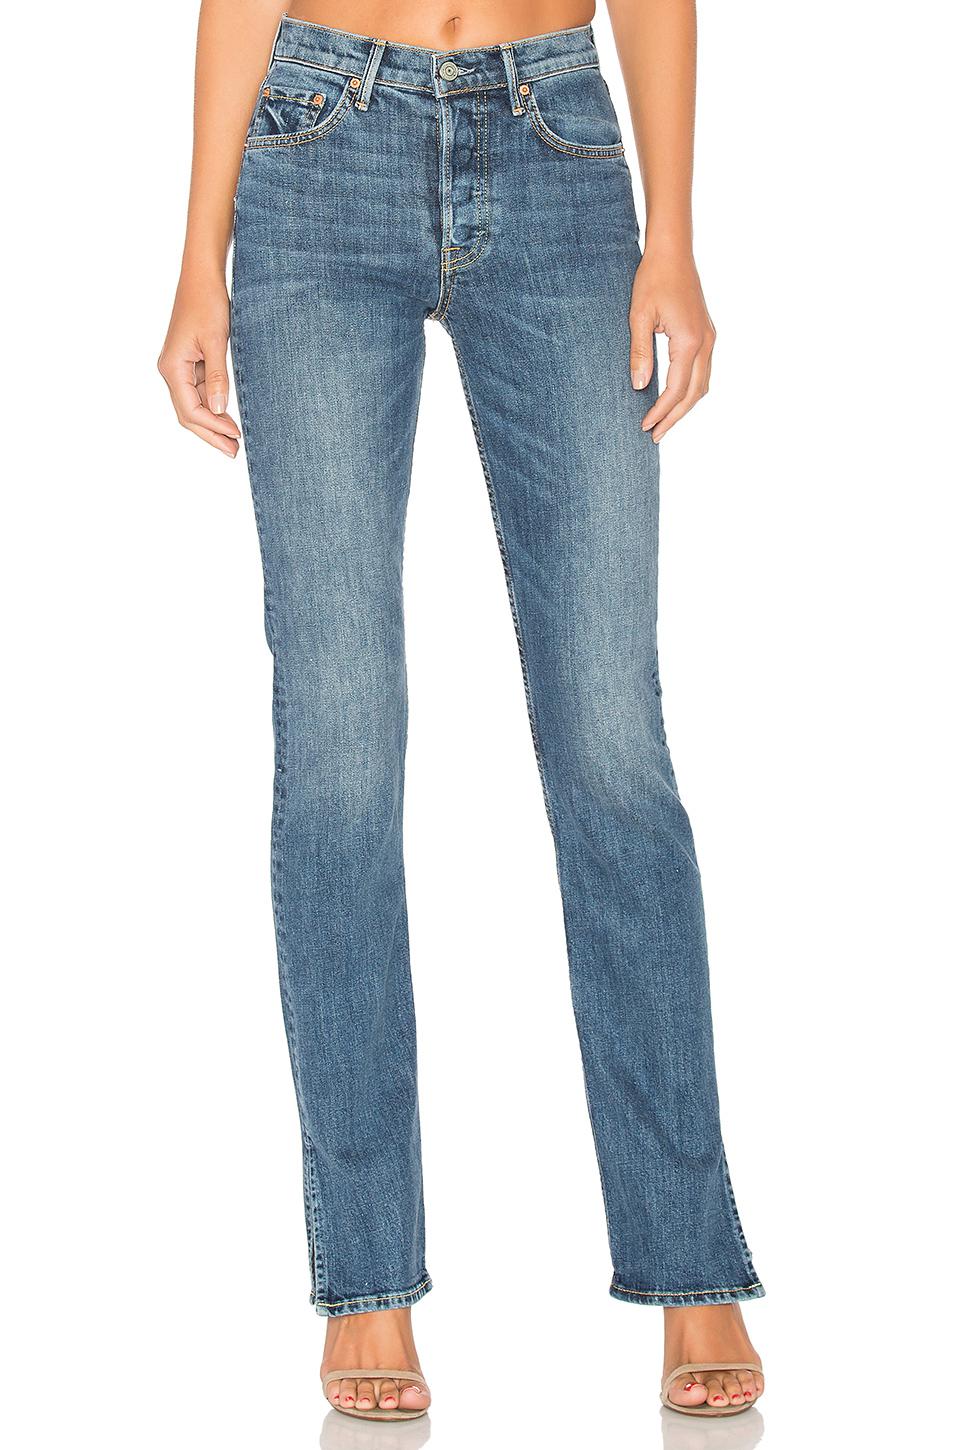 GRLFRND Natalia High-rise Skinny Split Jean in Blue - Lyst